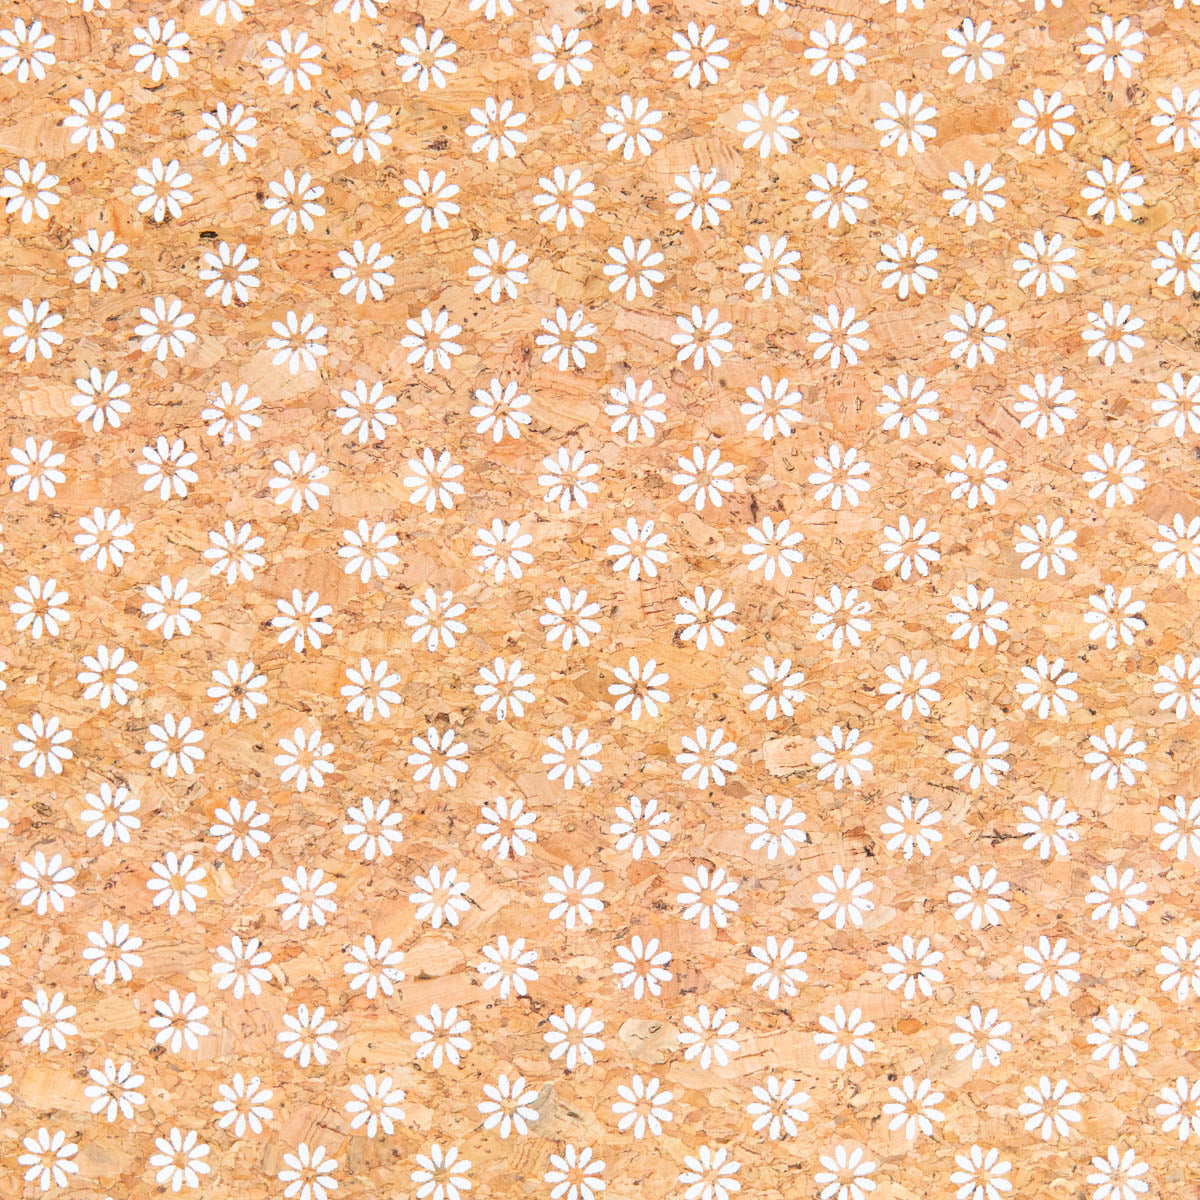 Delicate Daisy Charm Fresh & Natural White Floral Cork Fabric COF-463-A